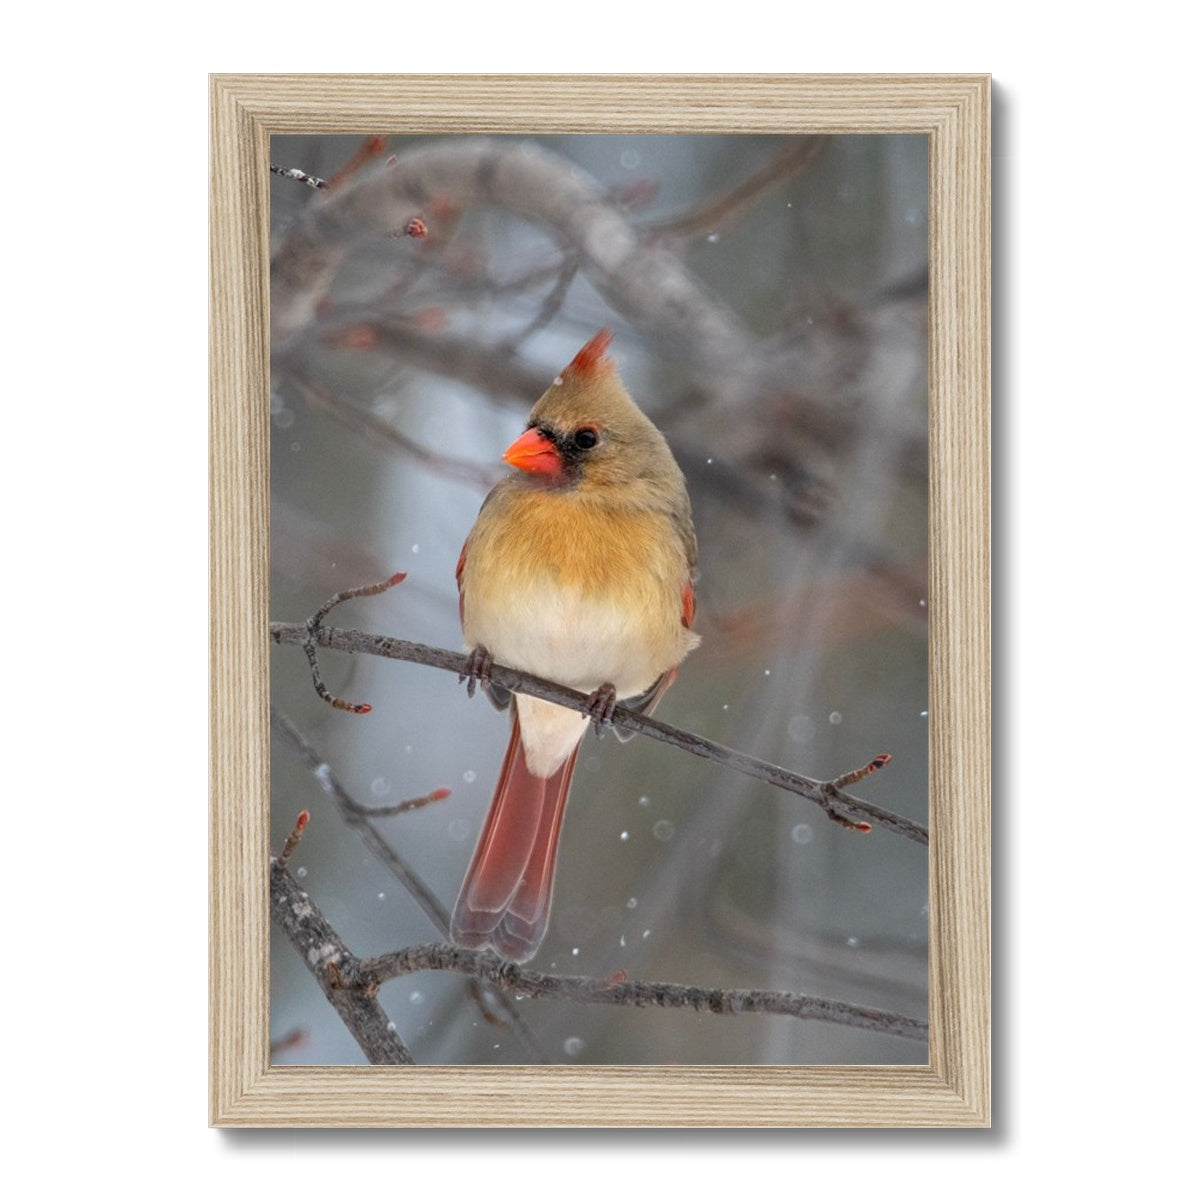 Famale Cardinal Framed Print